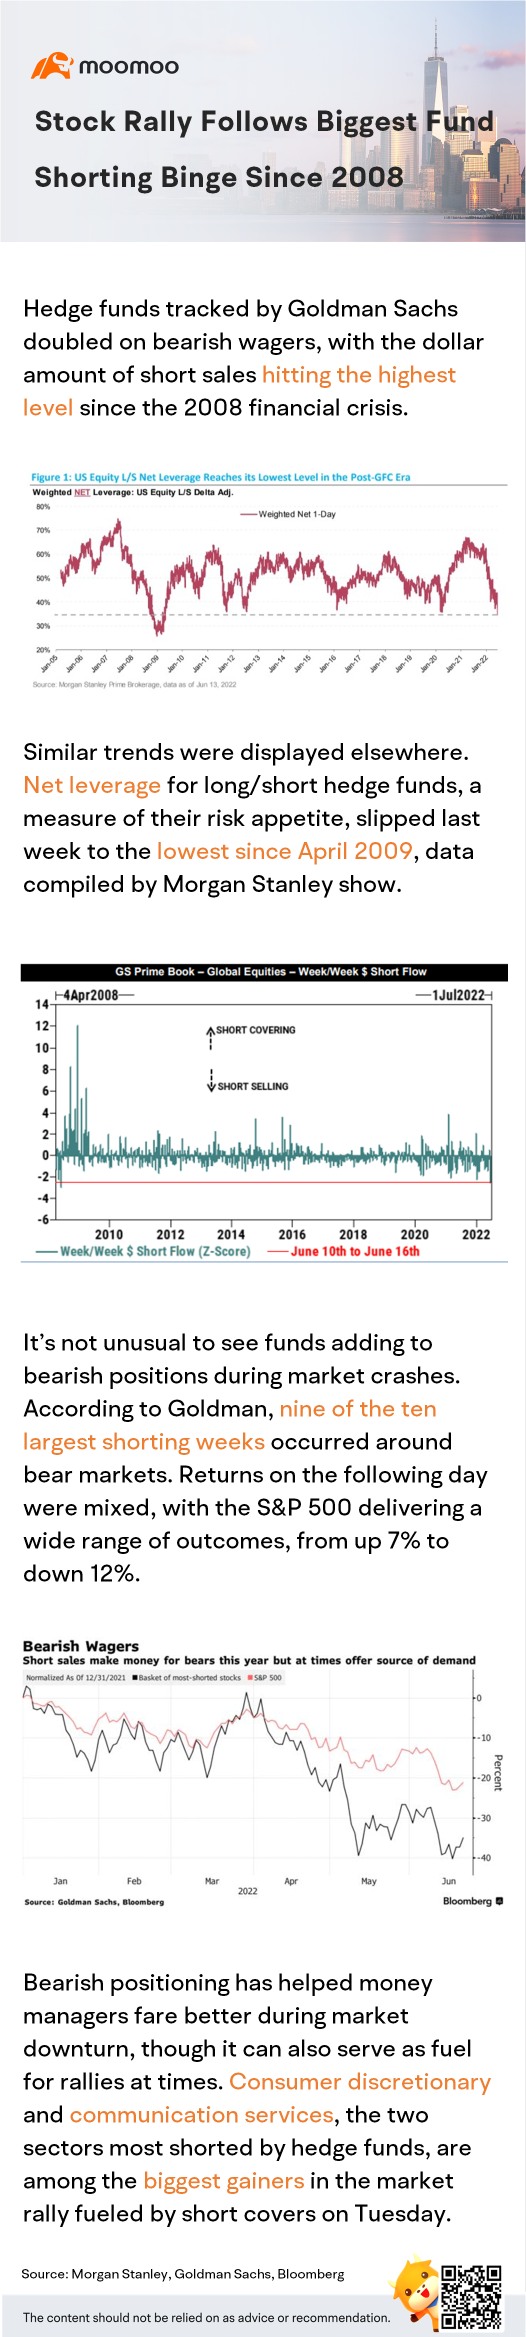 Stock rally follows biggest fund shorting binge since 2008